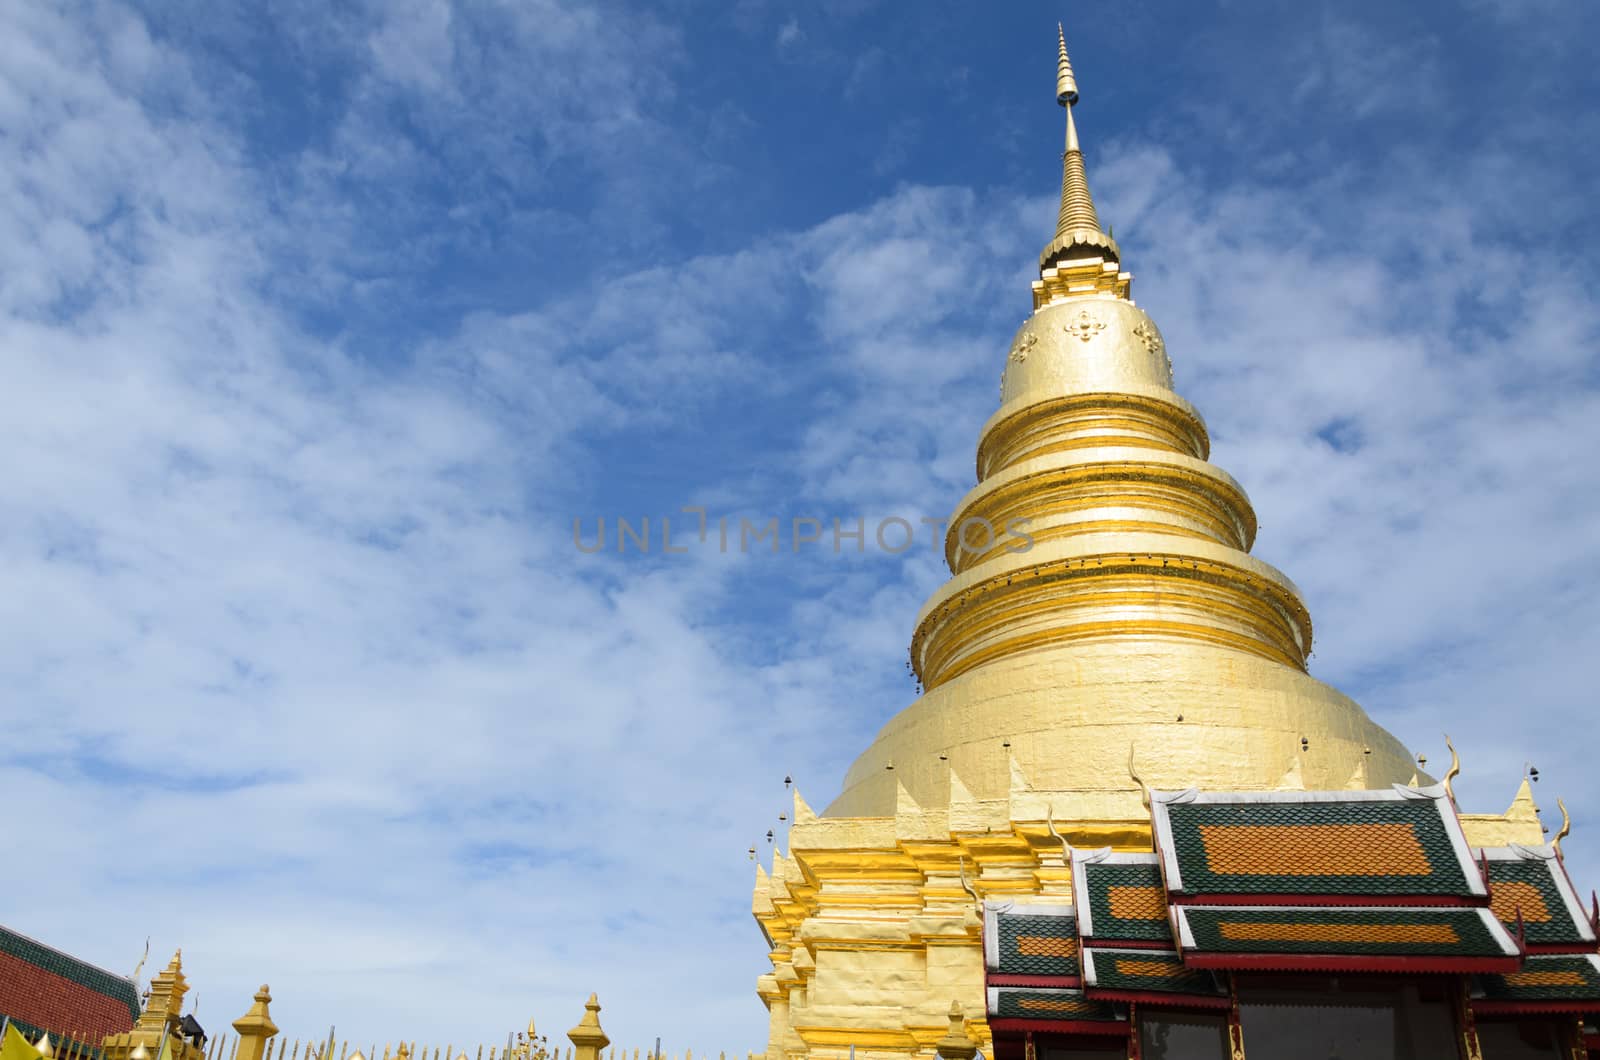 Golden Pagoda at Wat Phra That Hariphunchai in Lamphun province by hatoriz